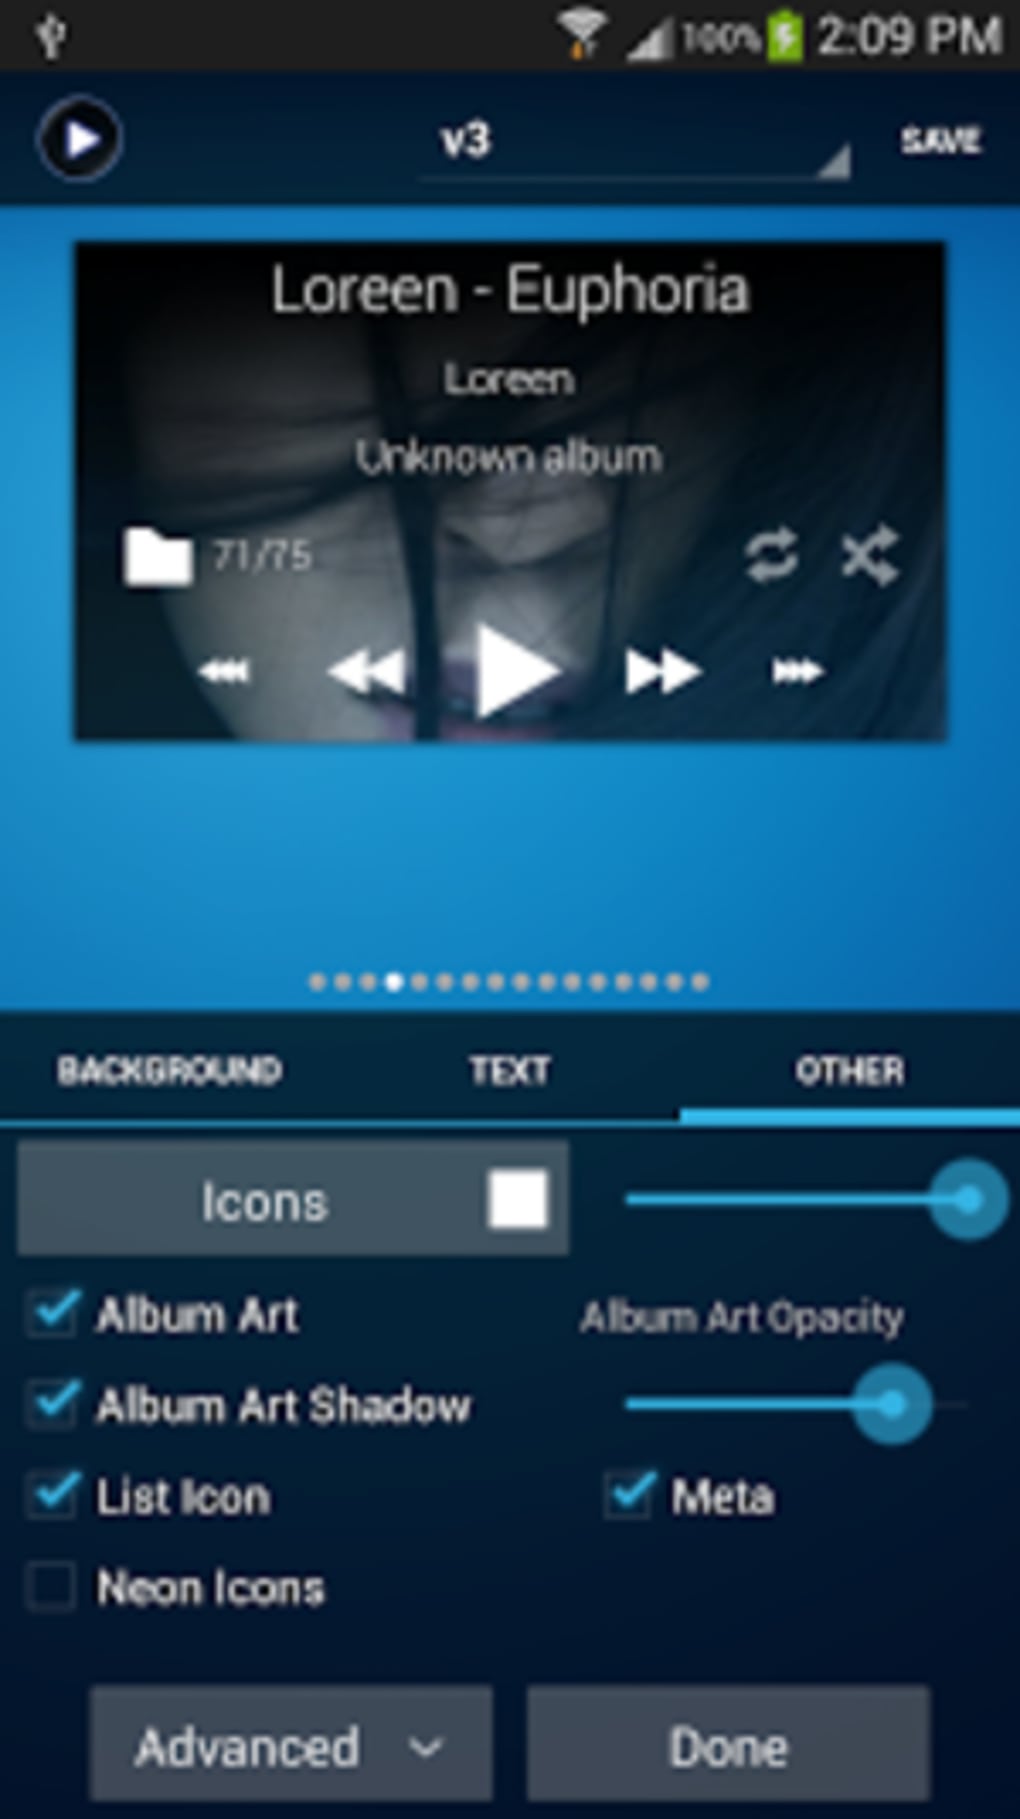 poweramp android app free download